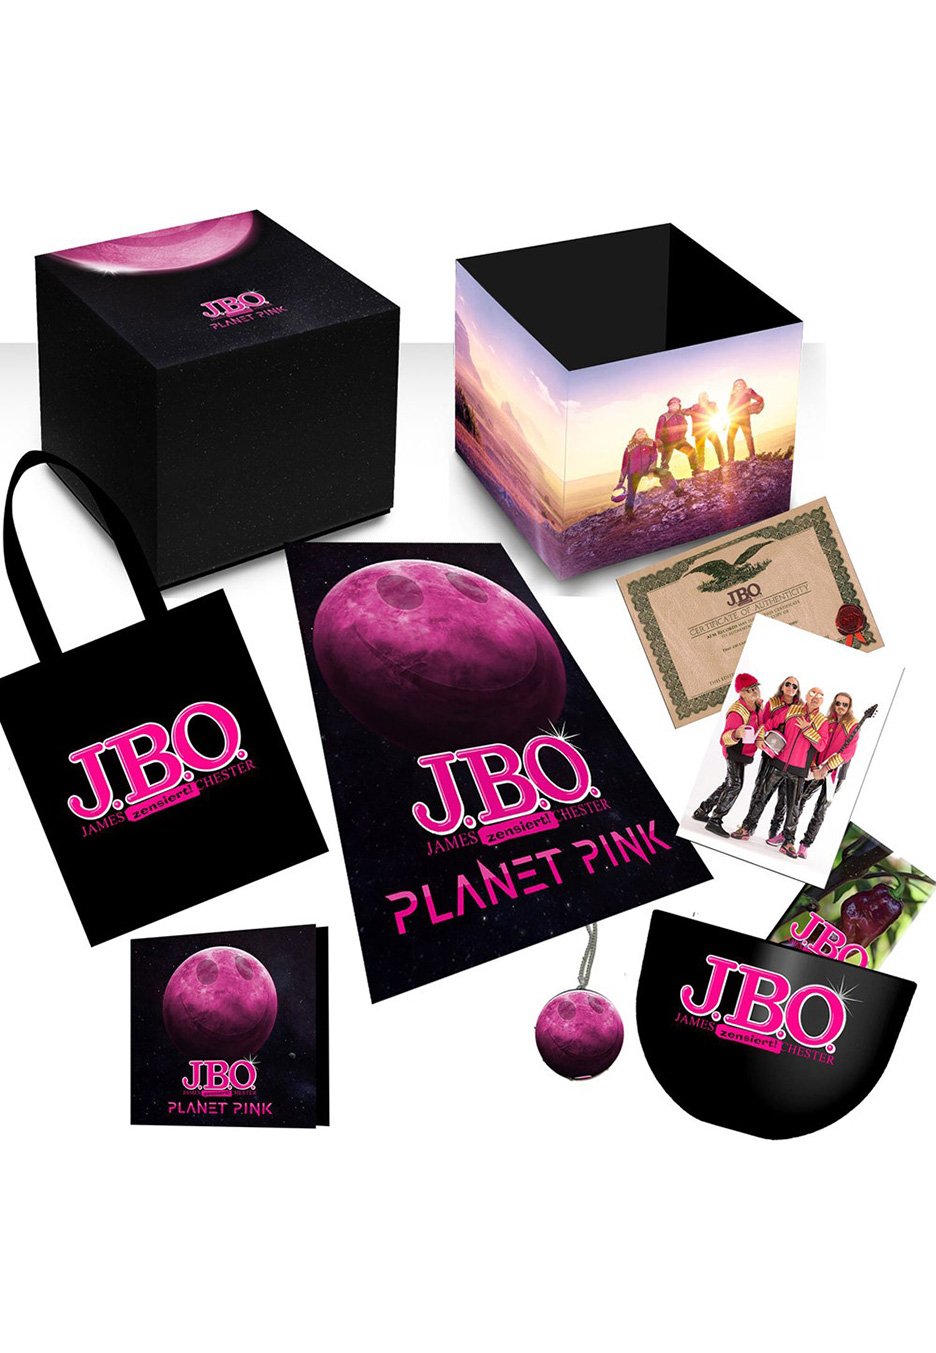 J.B.O. - Planet Pink Limited Edition - CD Boxset